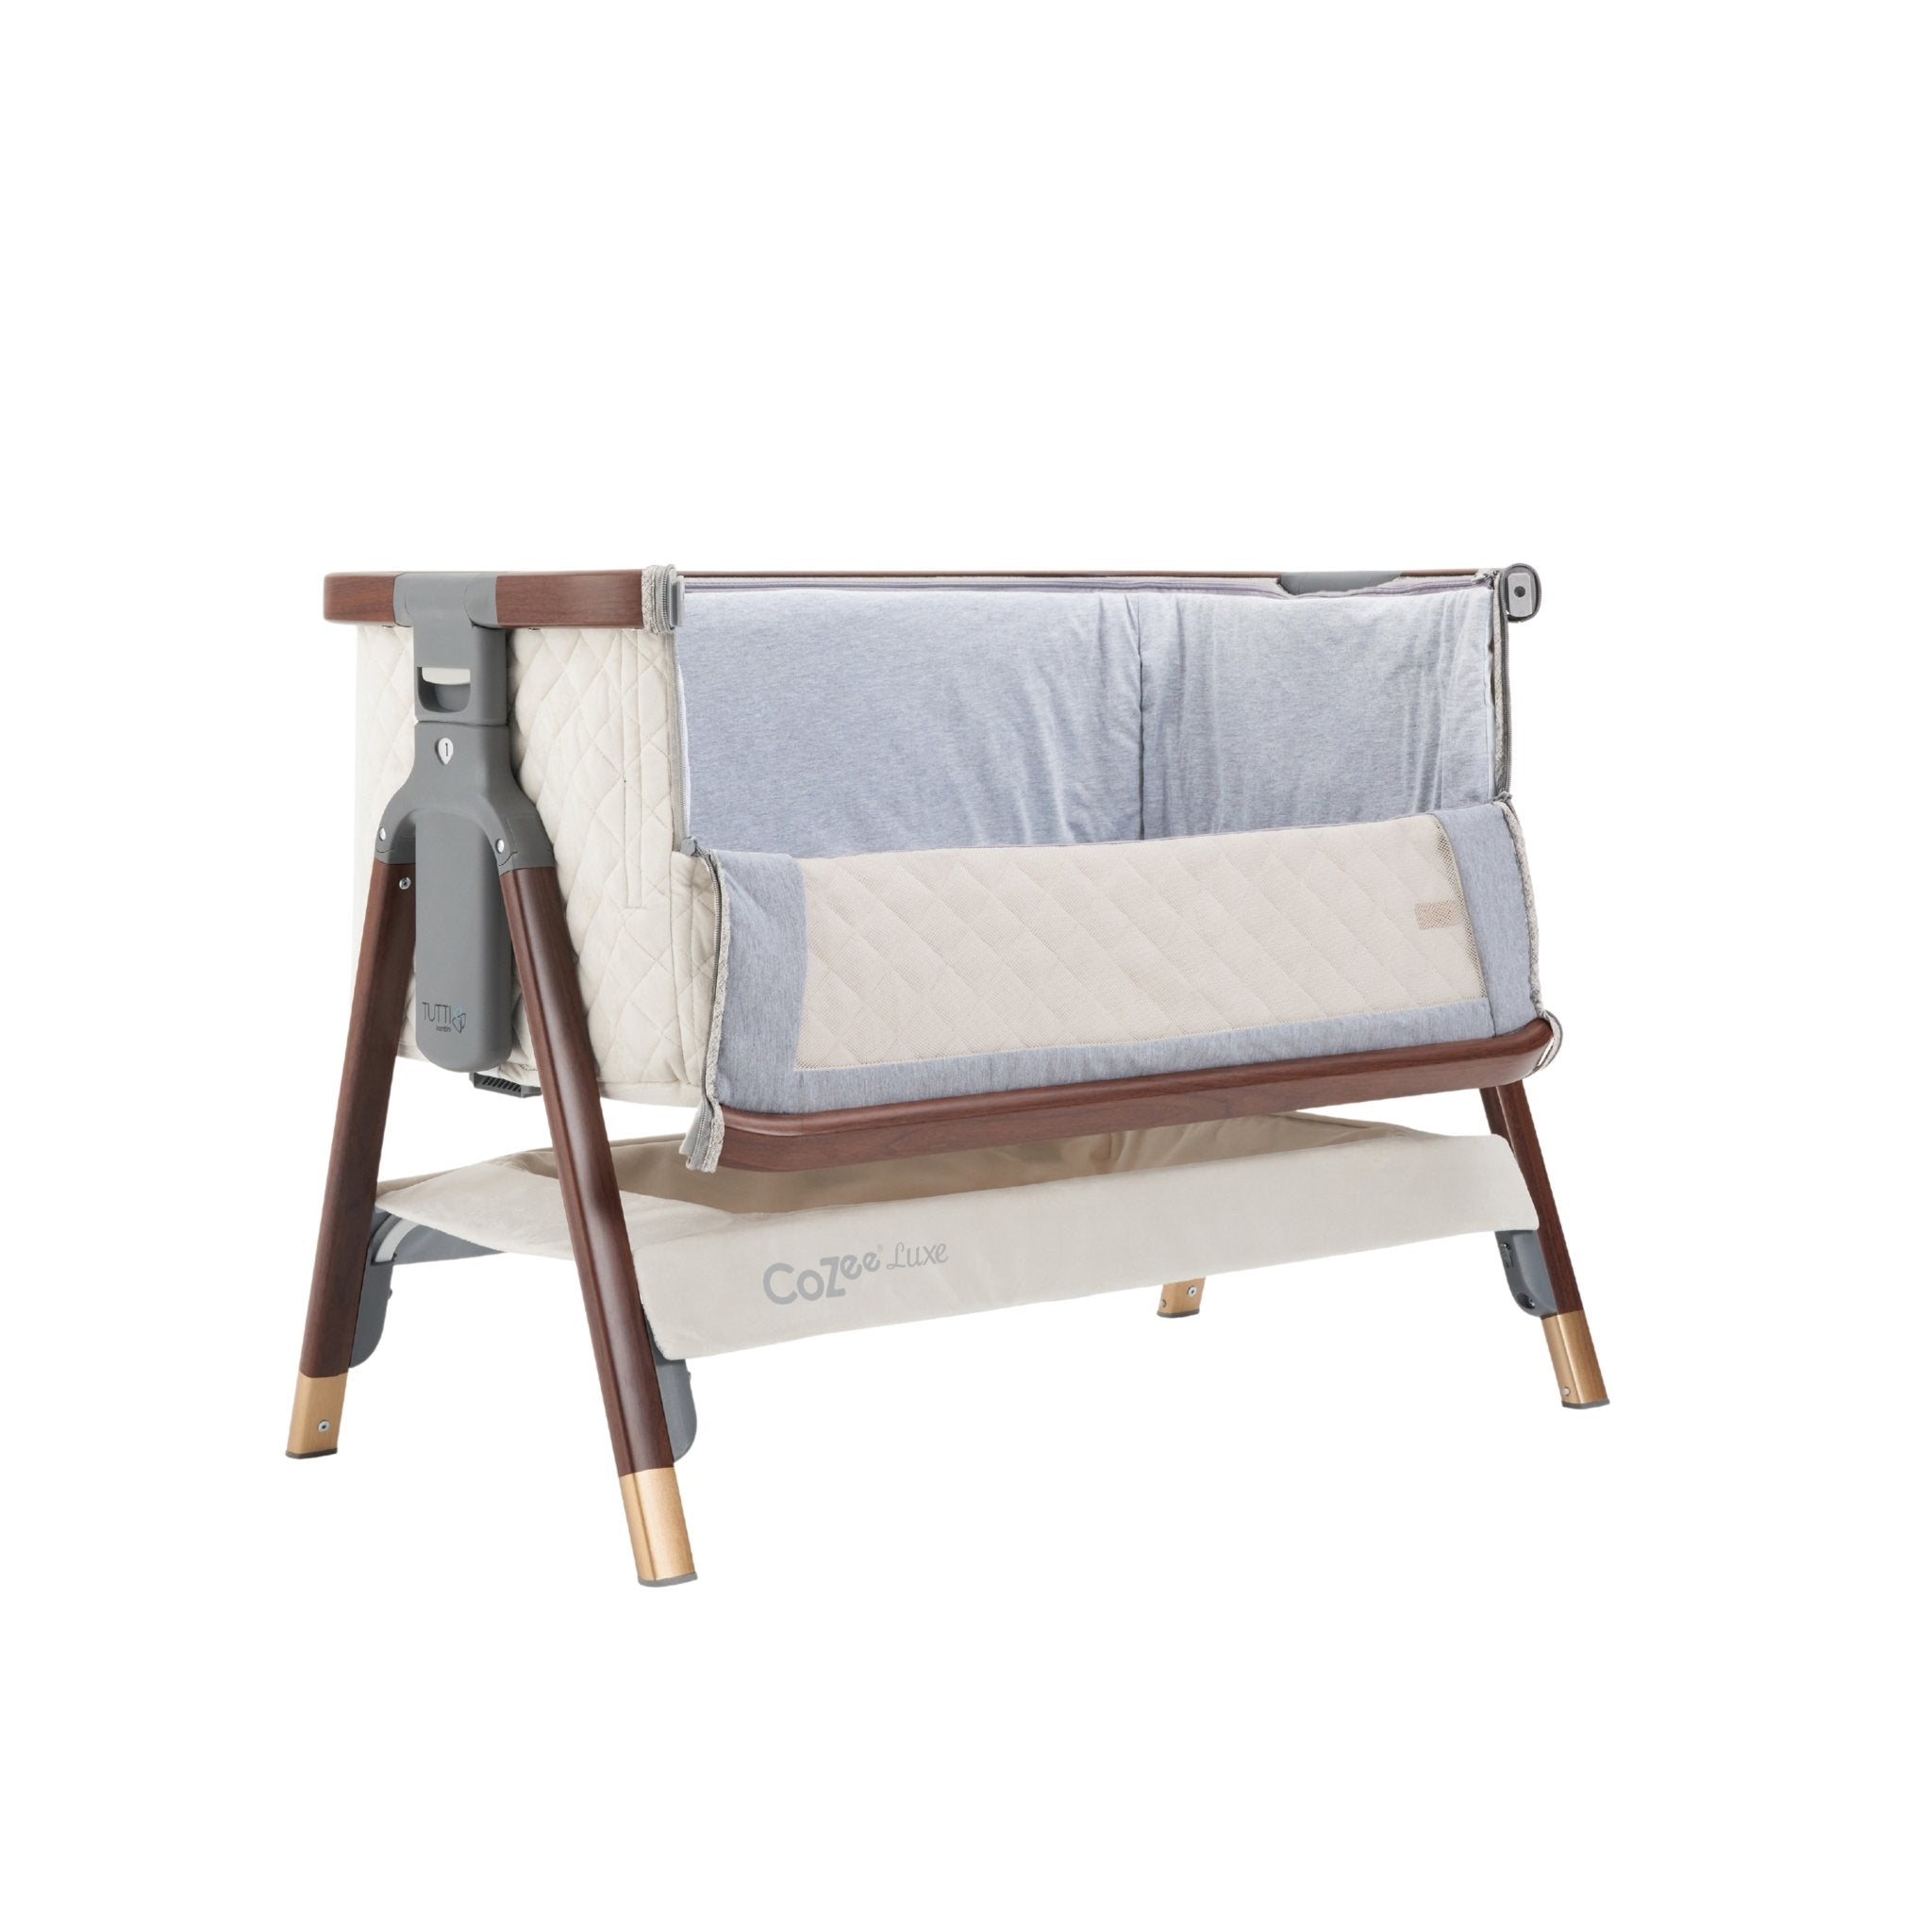 Tutti Bambi CoZee Luxe Bedside Crib - ANB Baby -5060145959002$300 - $500